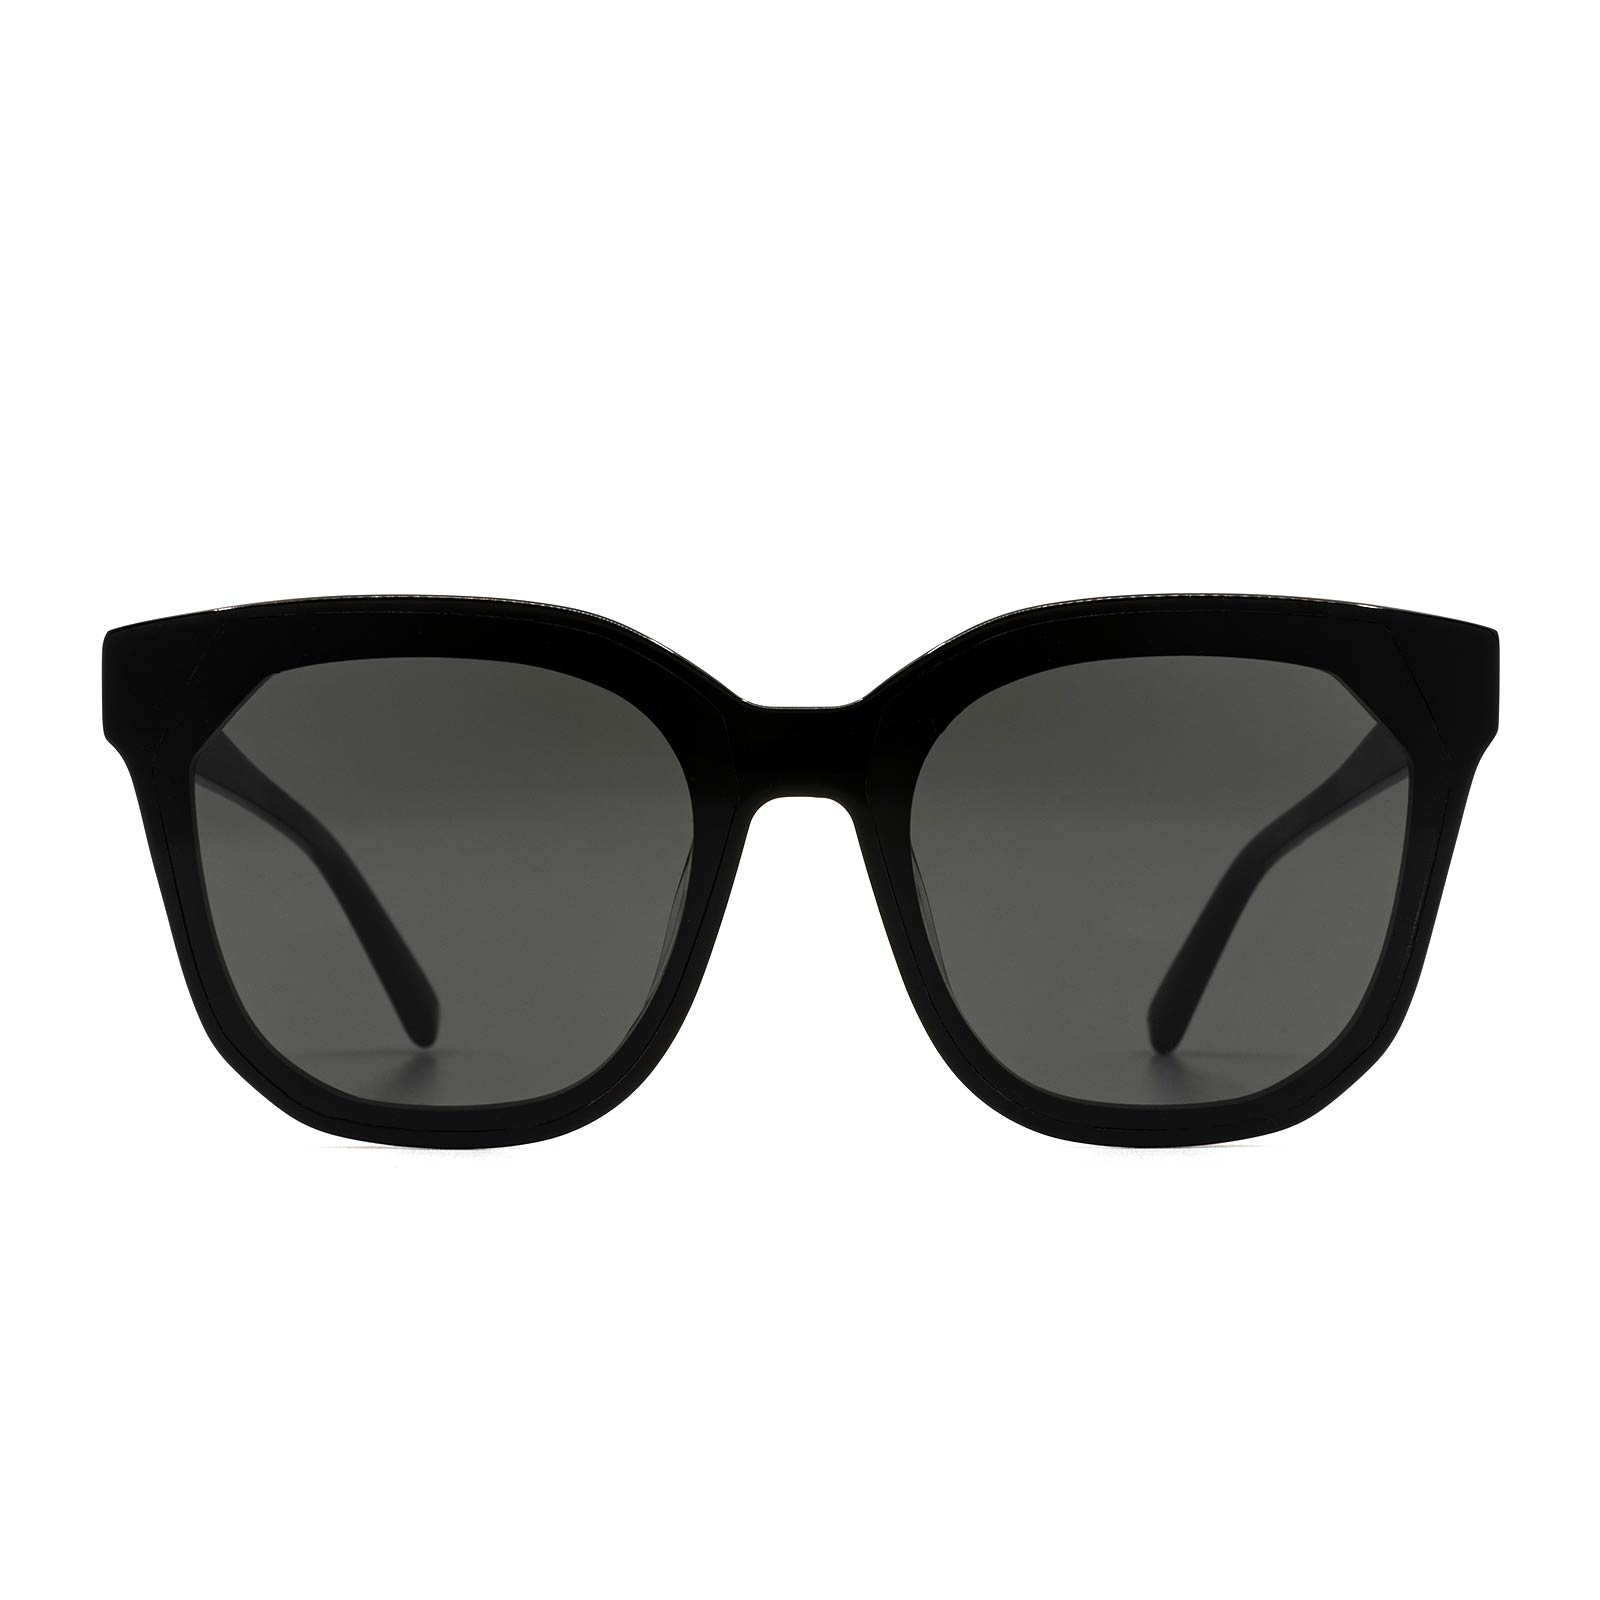 Gia Cat Eye Sunglasses | Black & Solid Grey Lenses | DIFF Eyewear